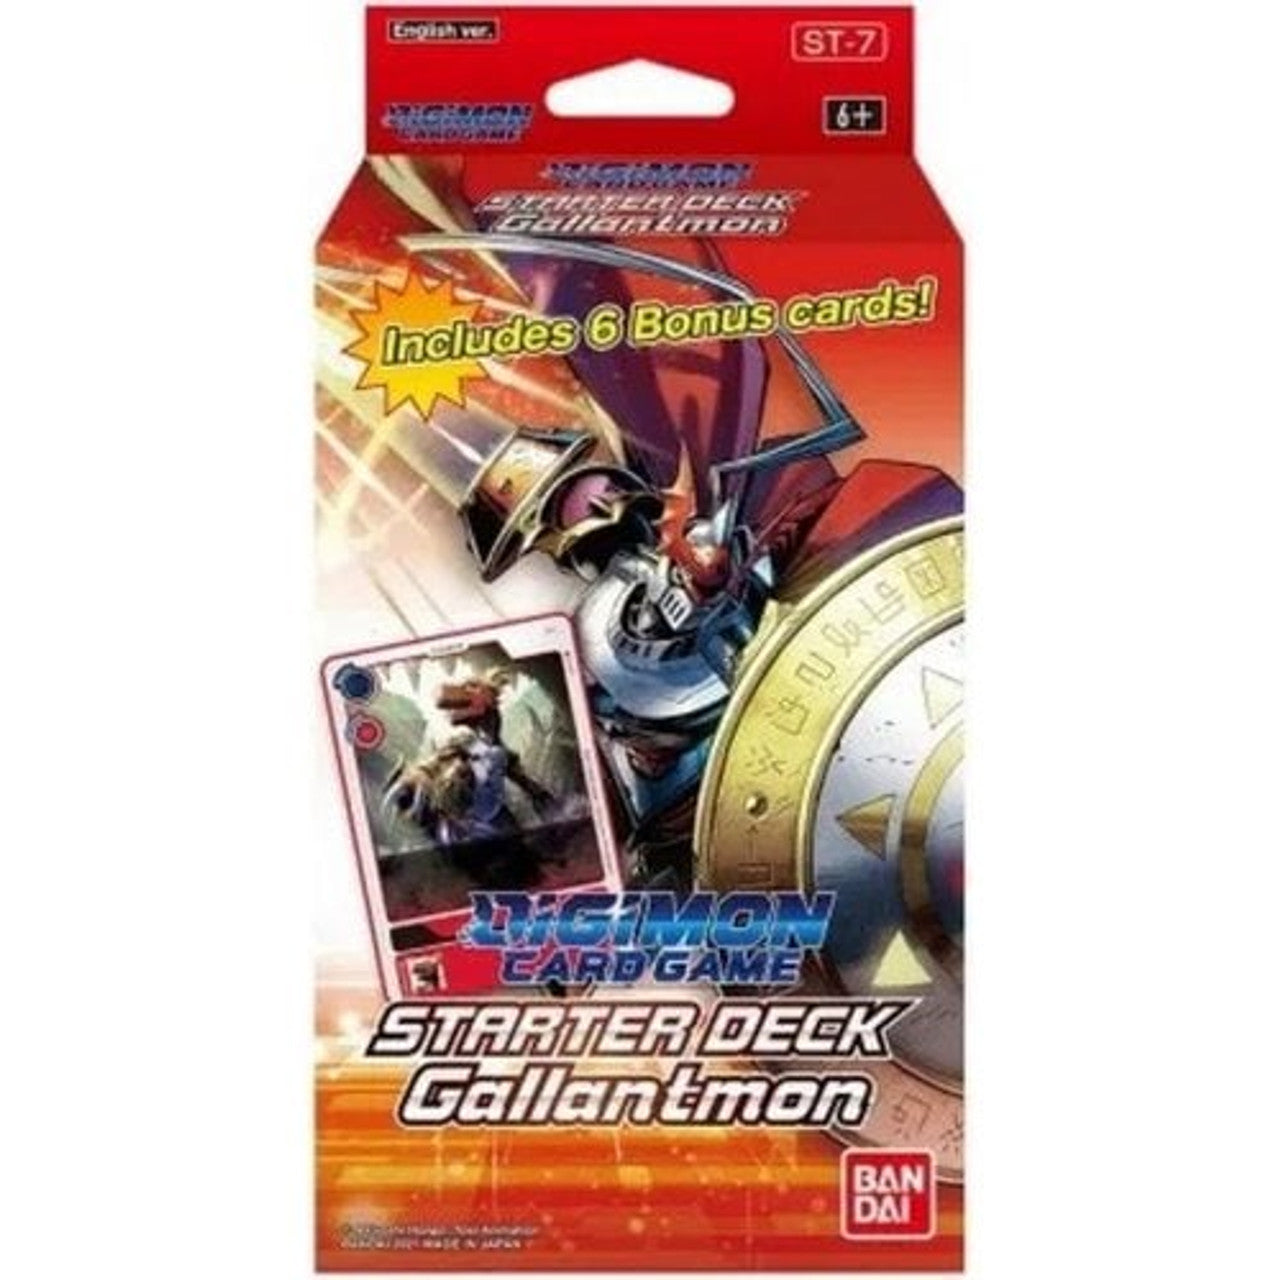 Digimon Card Game ST-7 Starter Deck Gallantmon